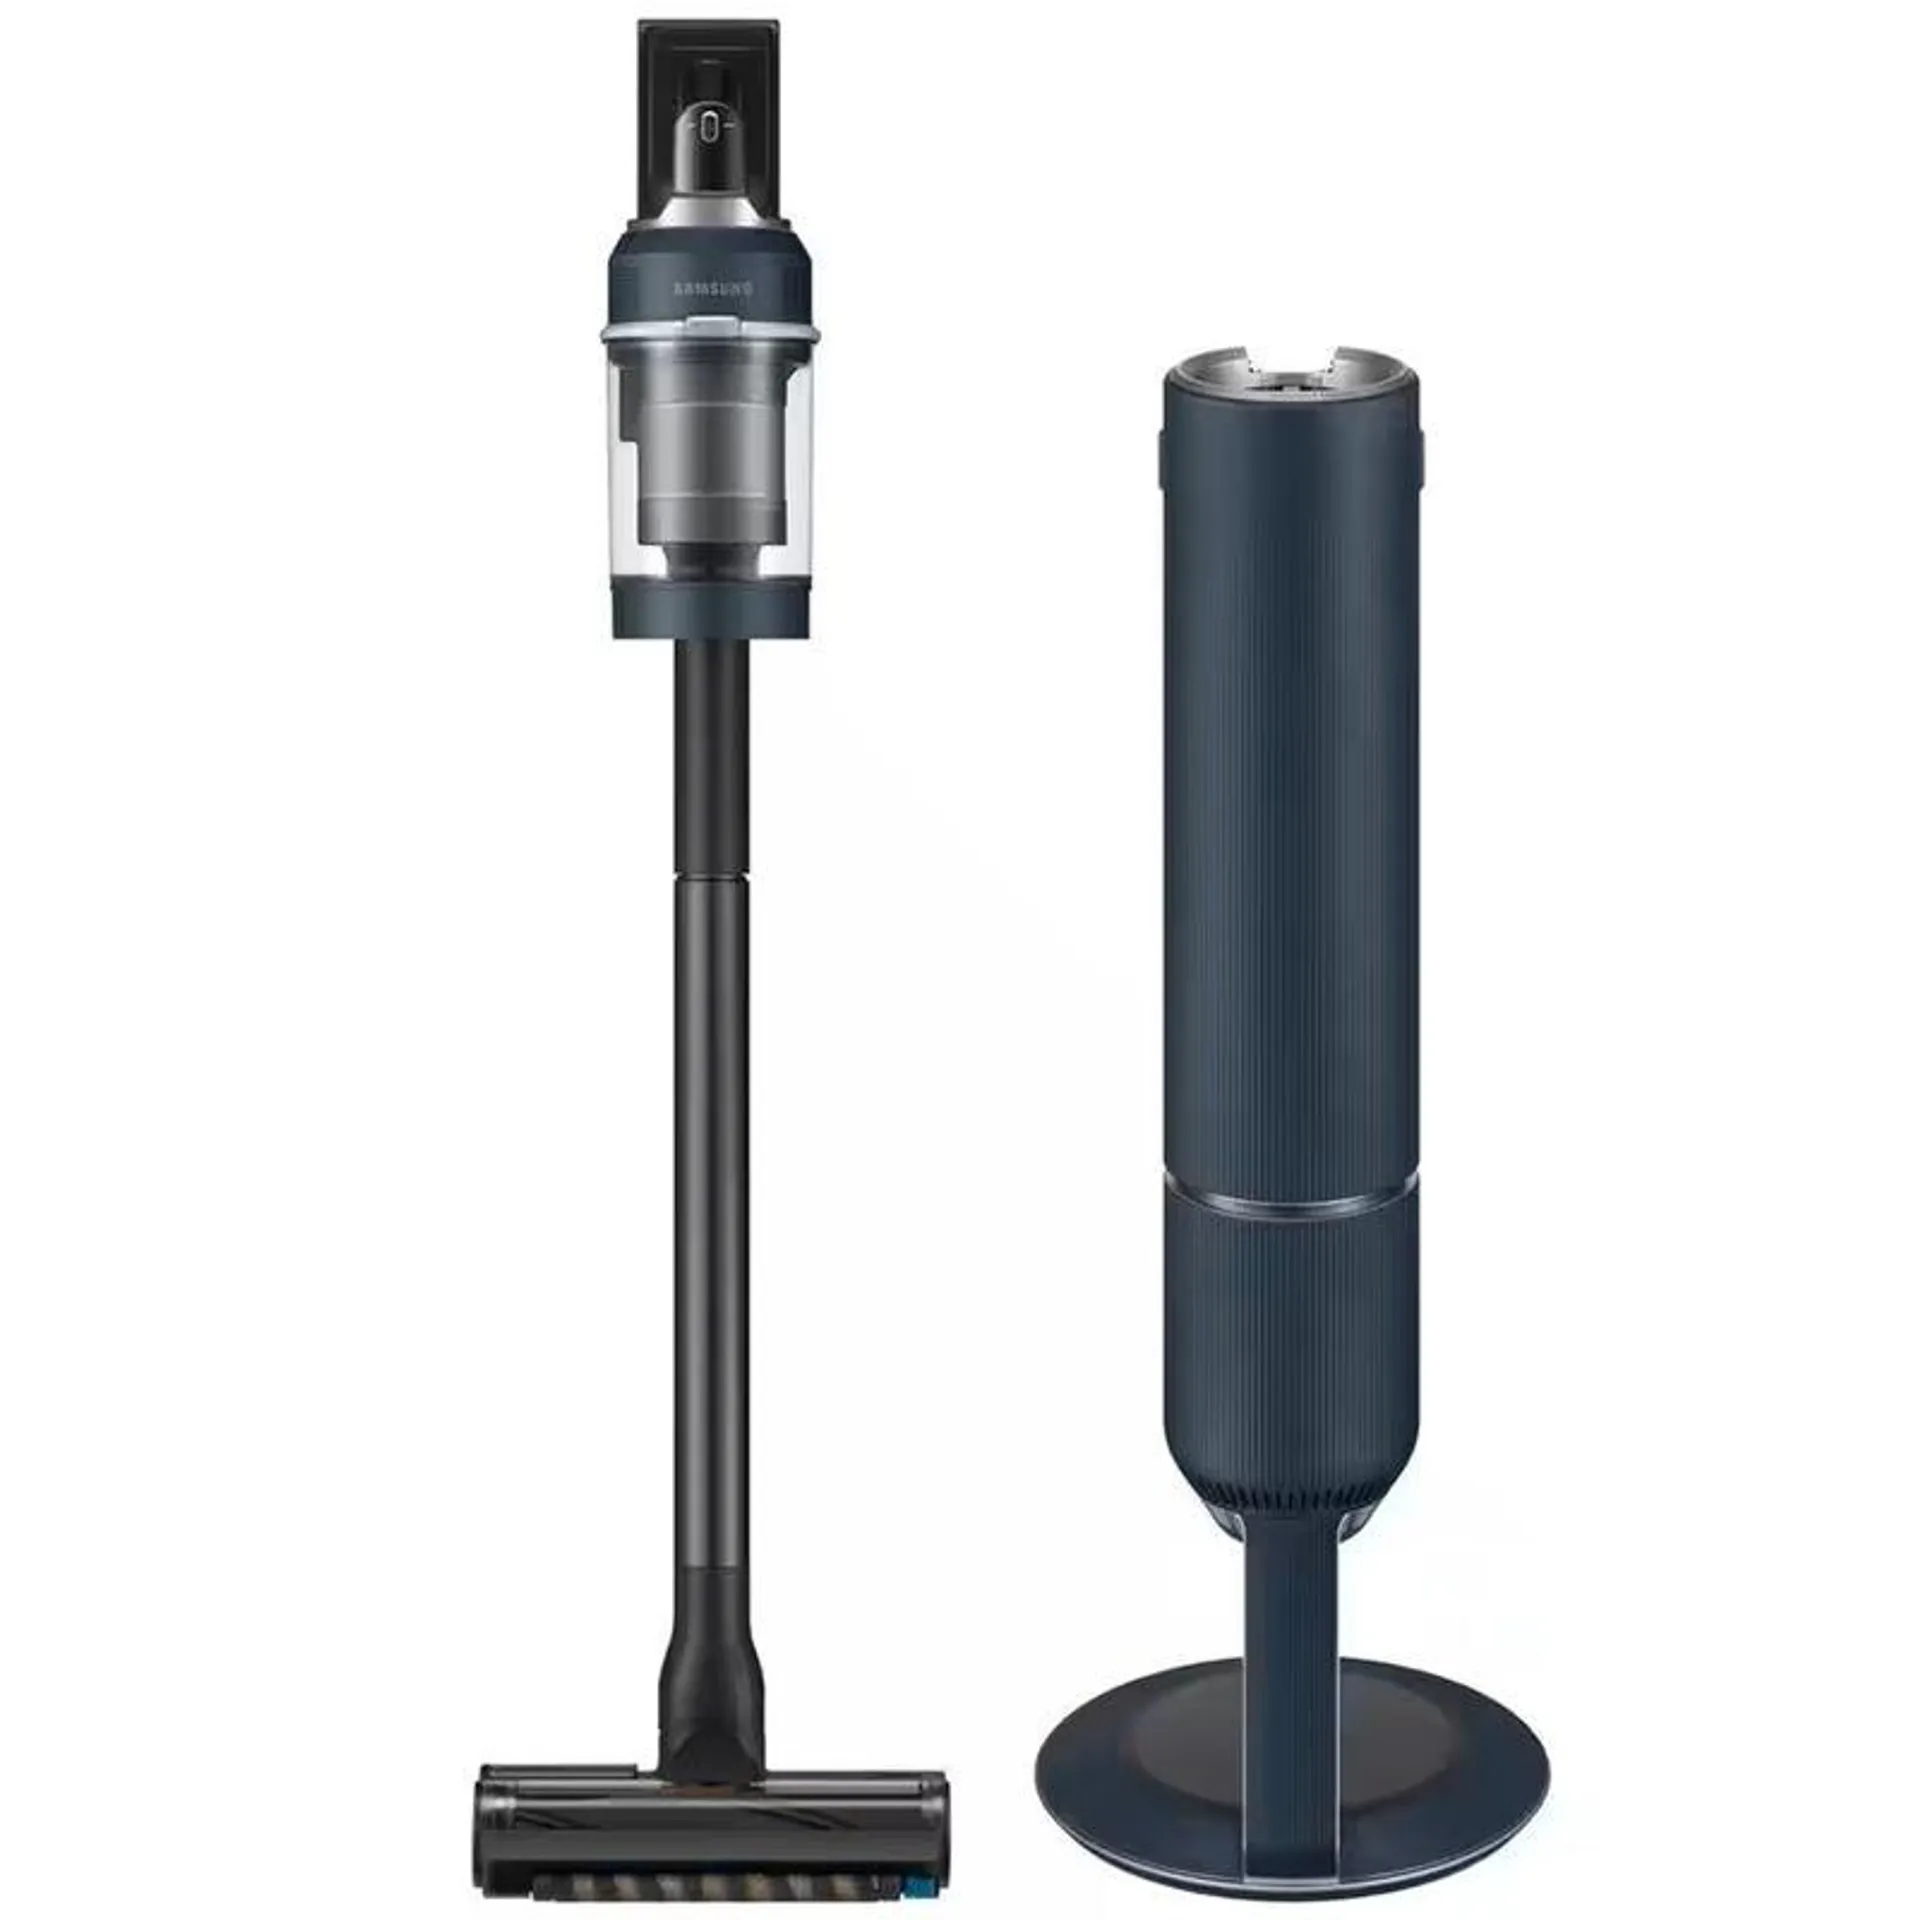 Samsung Bespoke Jet Cordless Stick Vacuum - Midnight Blue